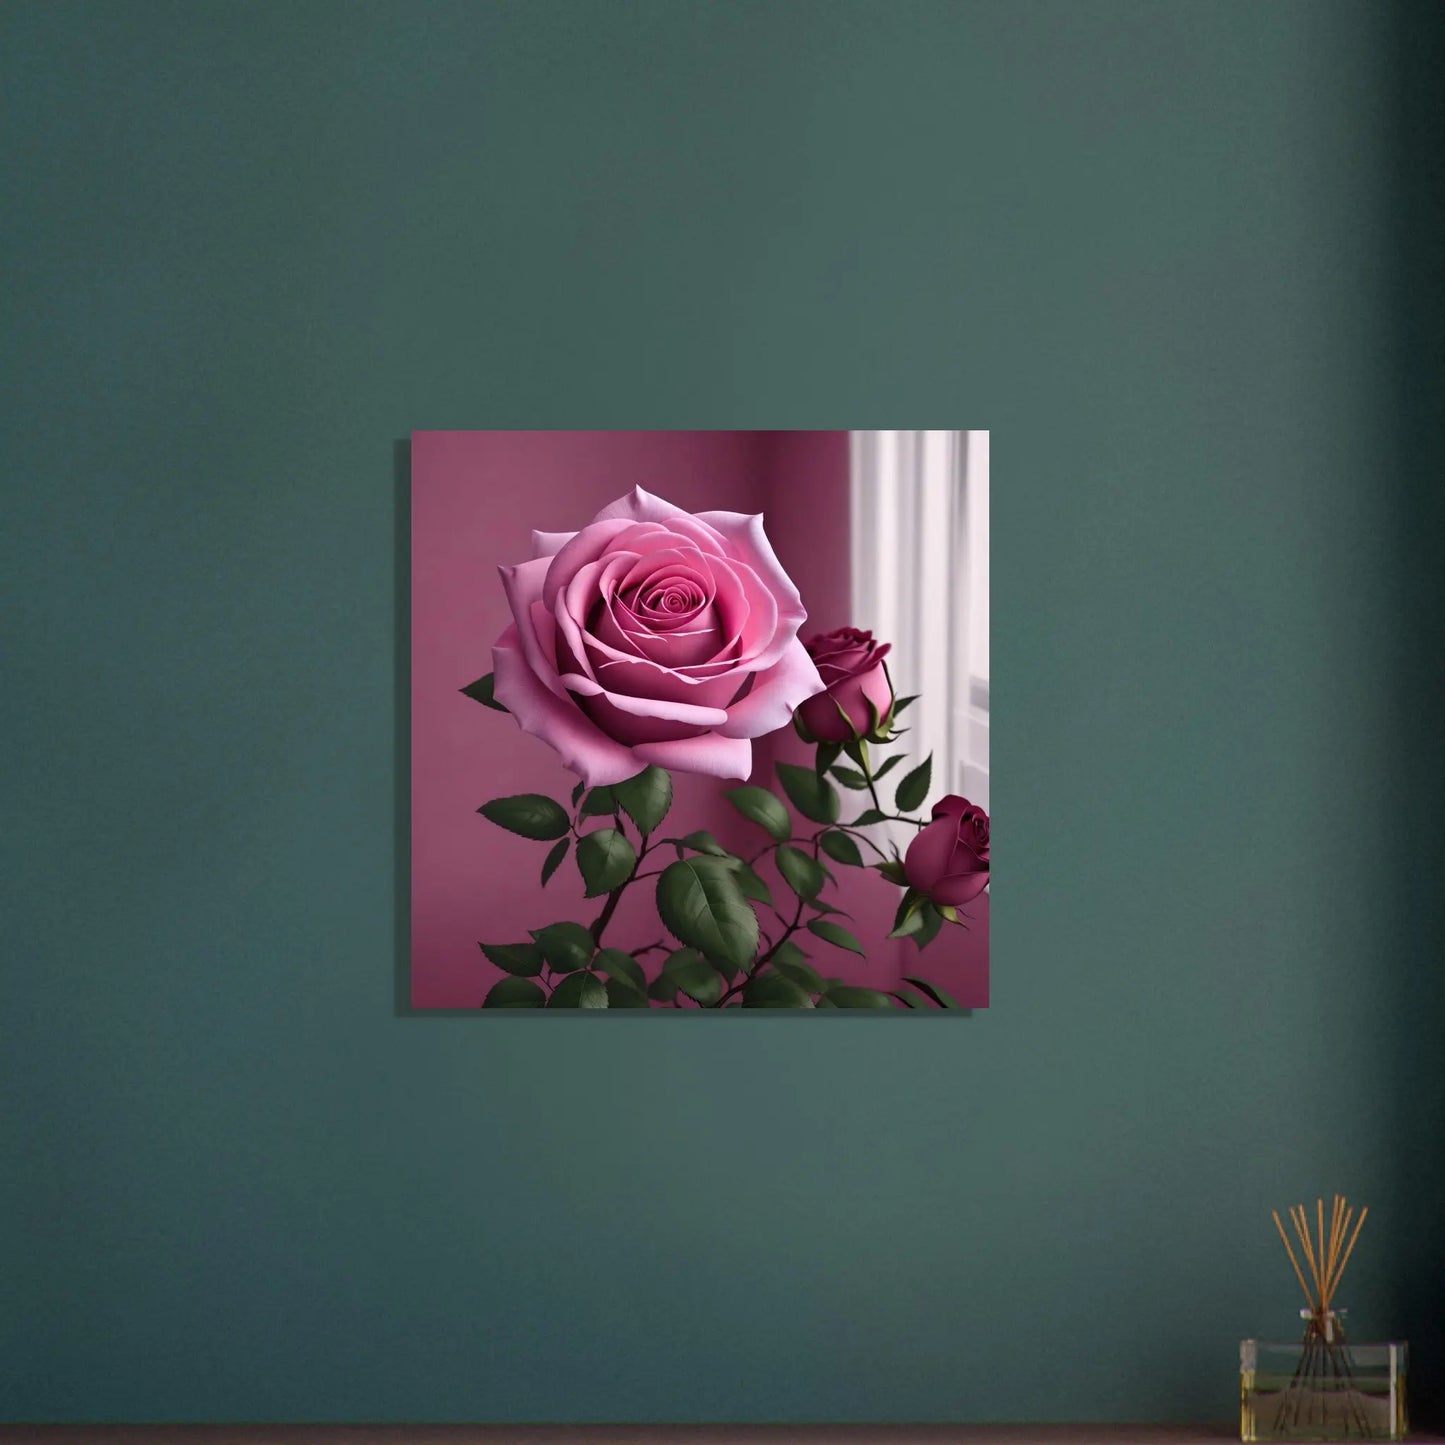 Aluminiumdruck - Rosa Rosen - Foto Stil, KI-Kunst - RolConArt, Pflanzen, 60x60-cm-24x24